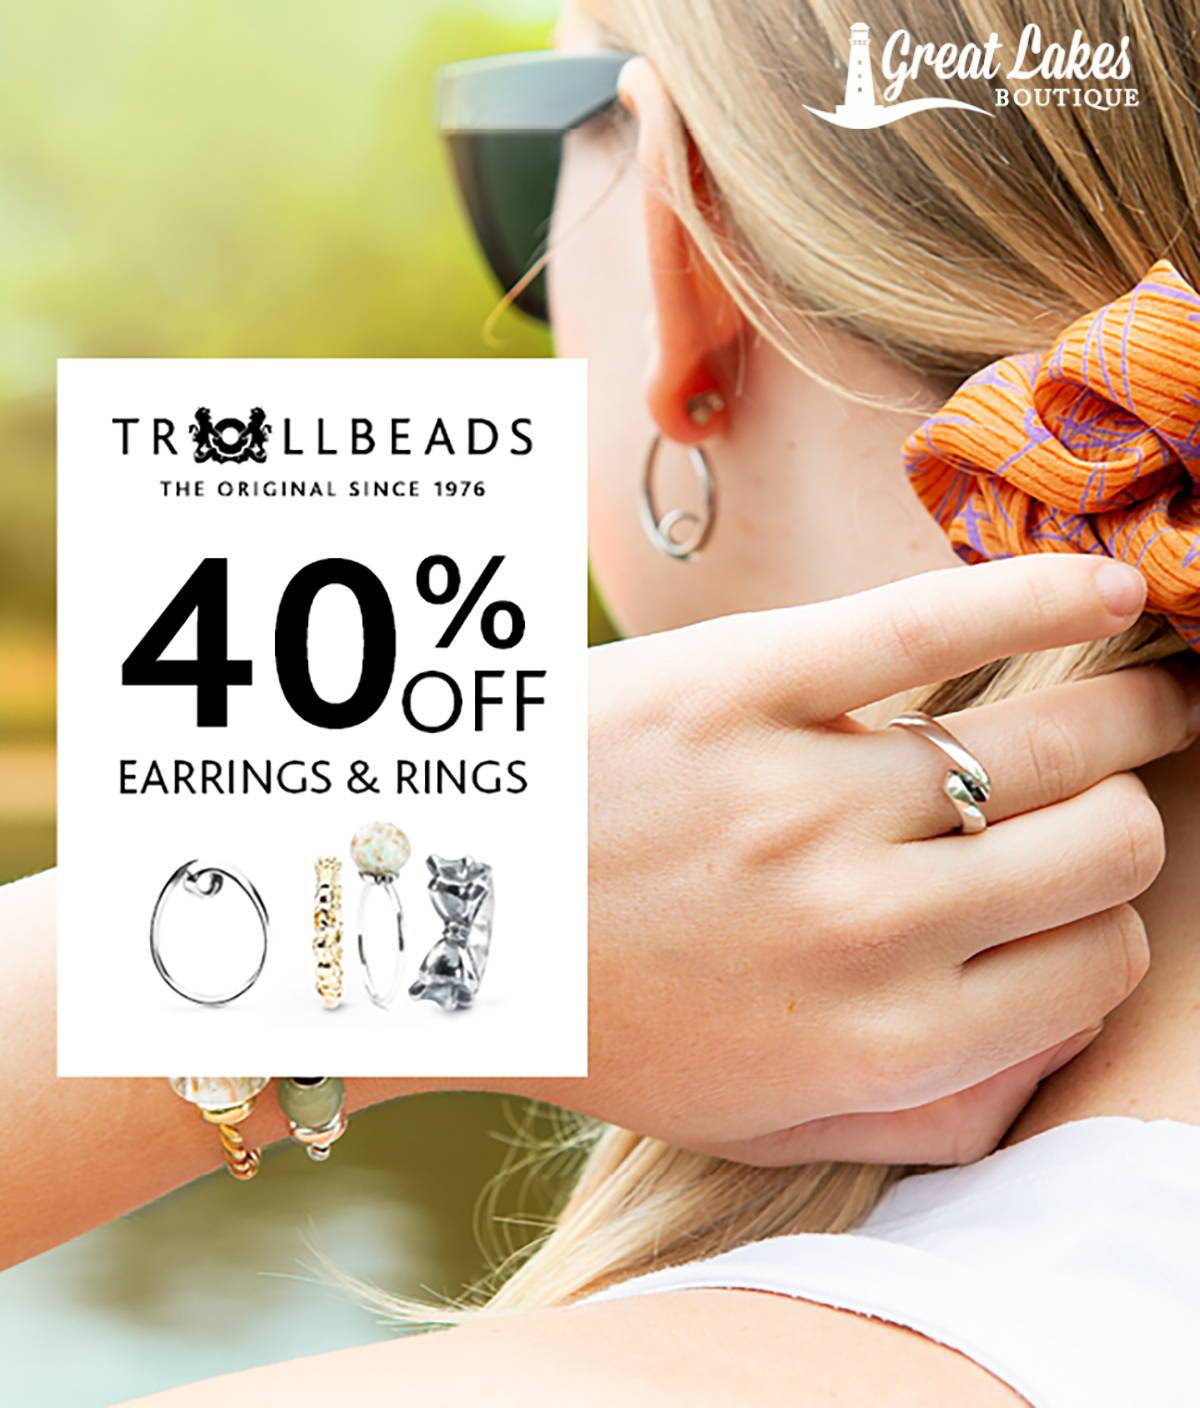 Trollbeads Ring & Earring Promotion Begins